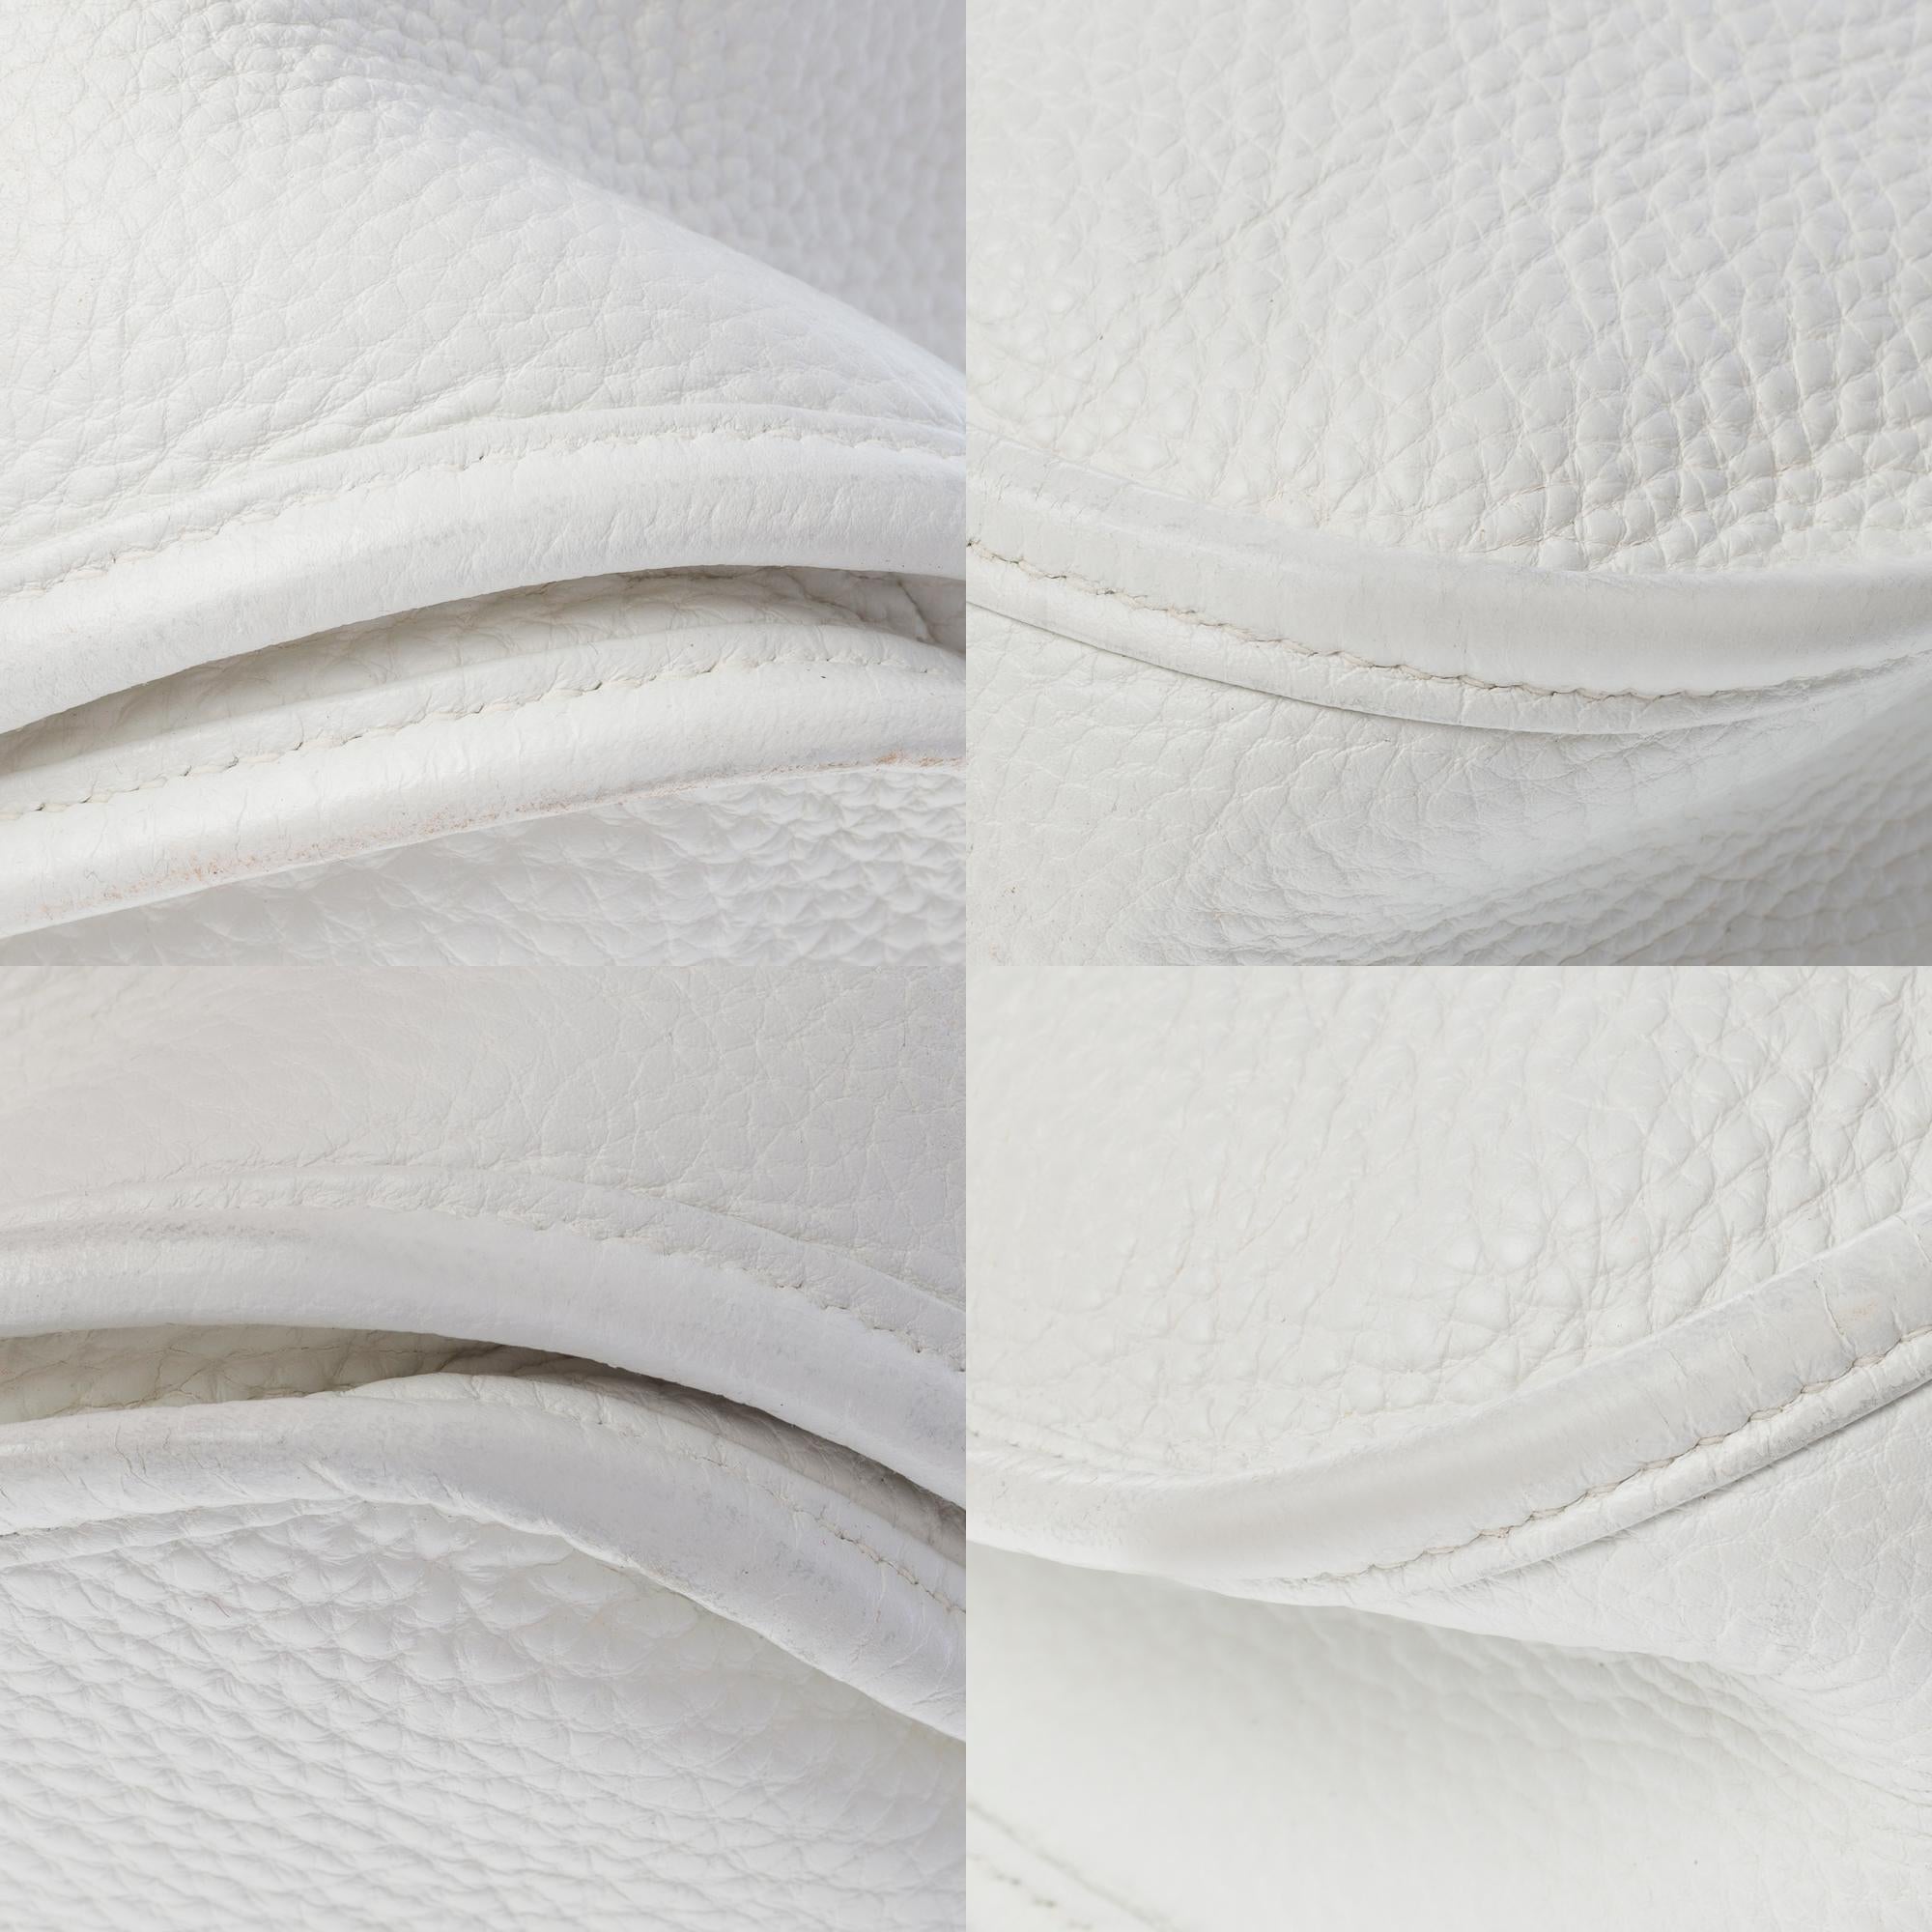 Gorgeous Hermès Evelyne 29  shoulder bag in White Taurillon leather, SHW 6